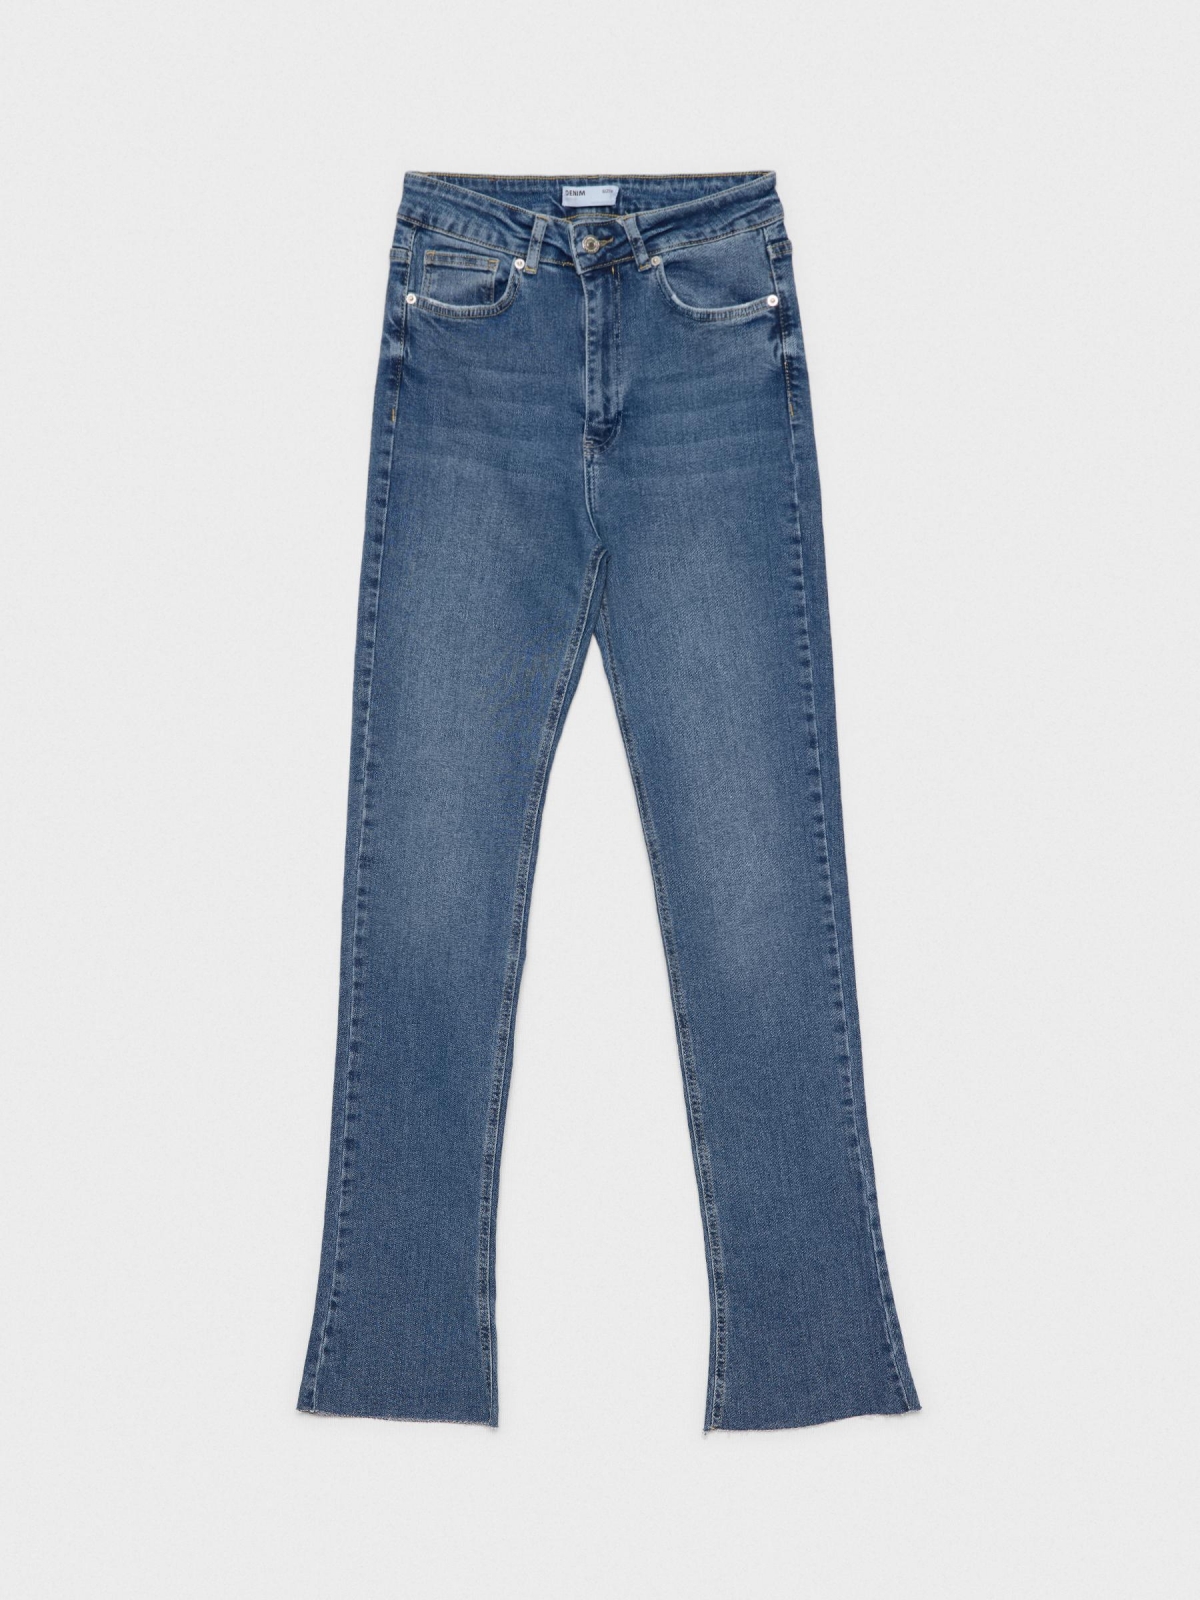  High waist blue flared jeans blue